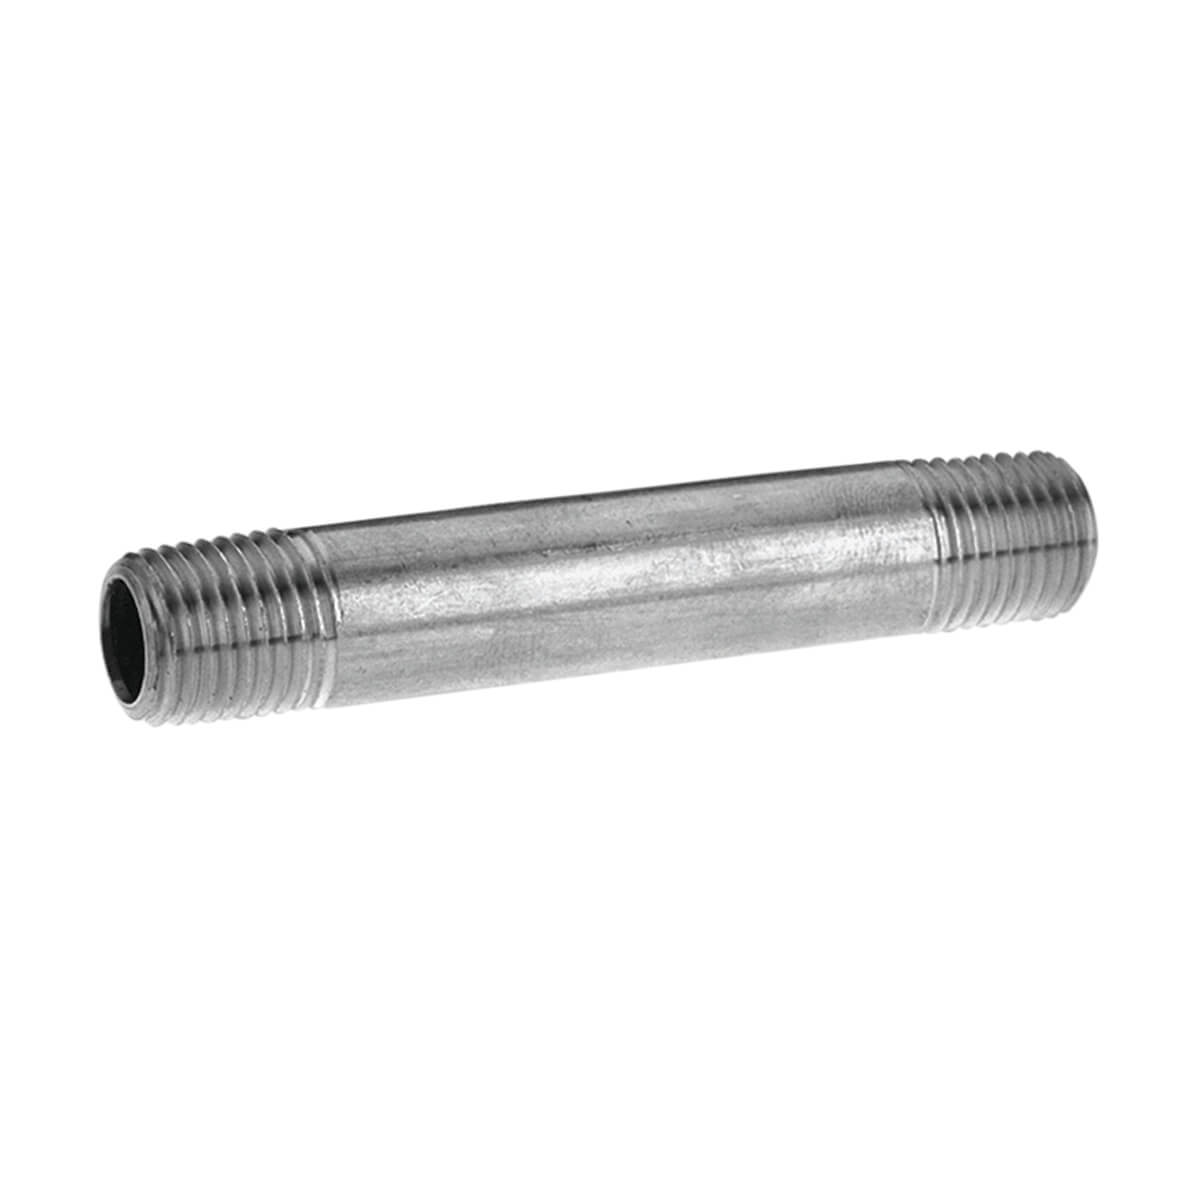 Pipe Nipple Galvanized Steel - 1-1/4-in x 2-in